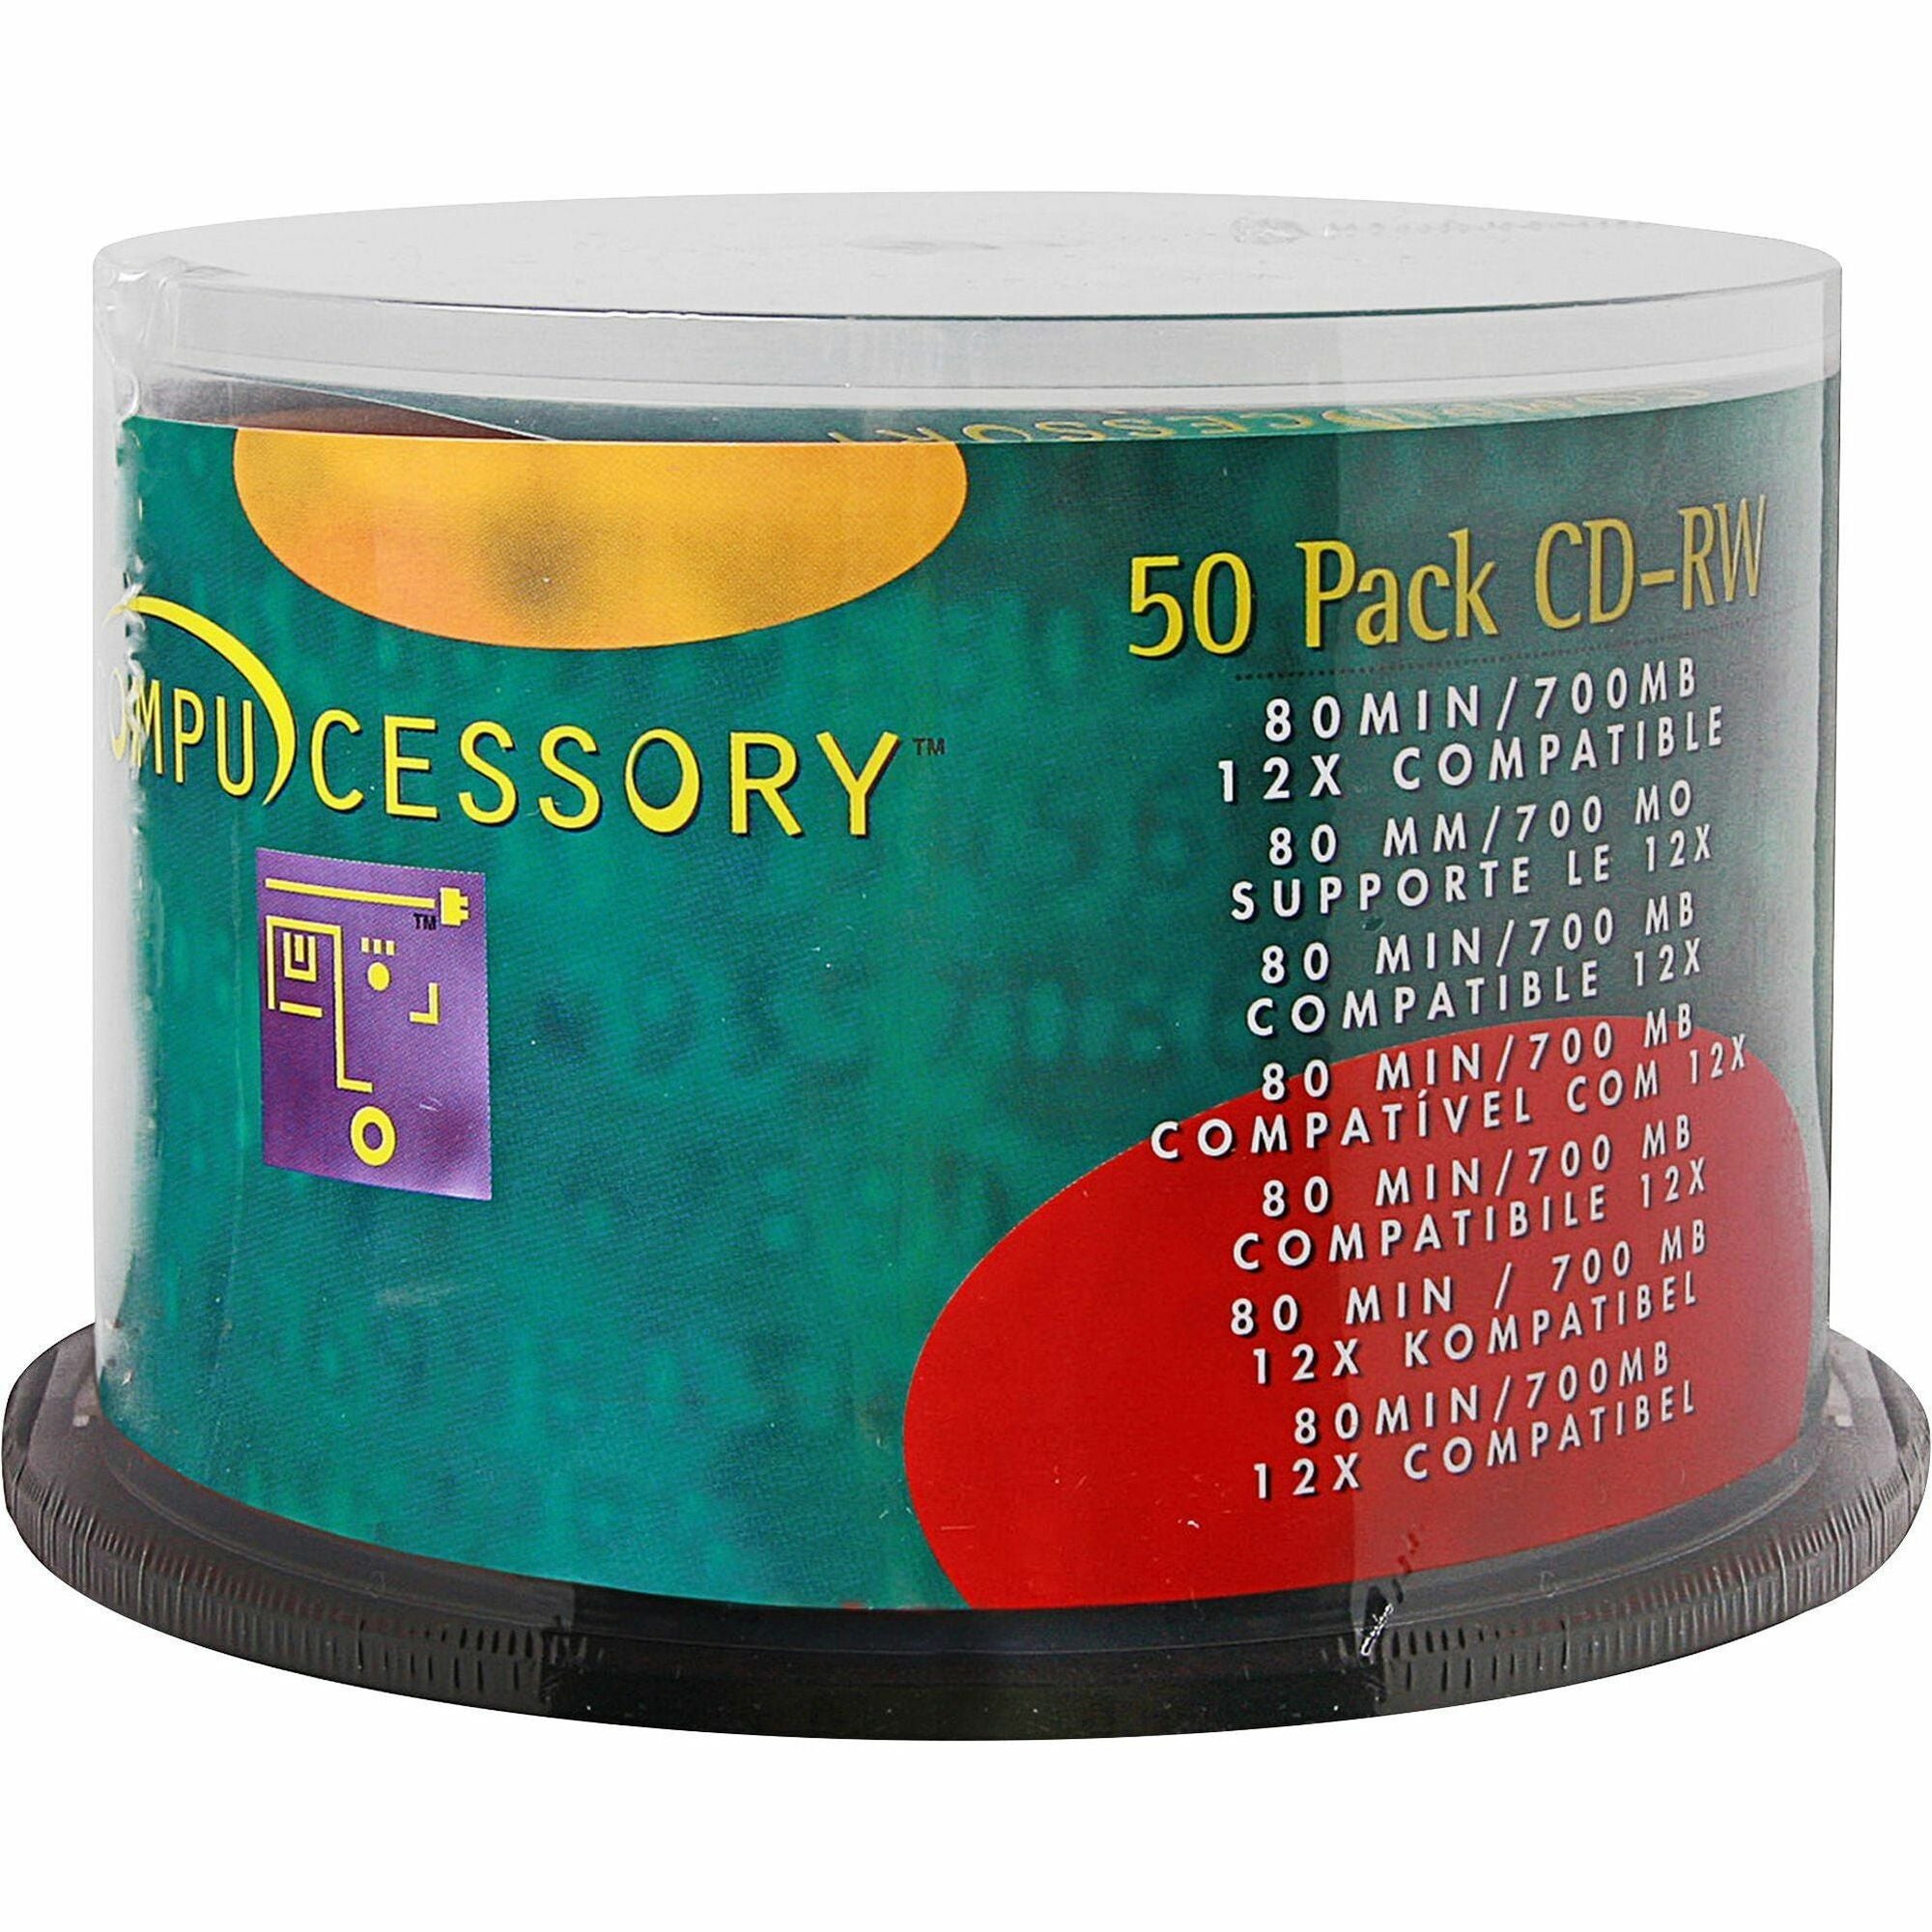 Compucessory CD Rewritable Media - CD-RW - 12x - 700 MB - 50 Pack - 120mm - 1.33 Hour Maximum Recording Time - 